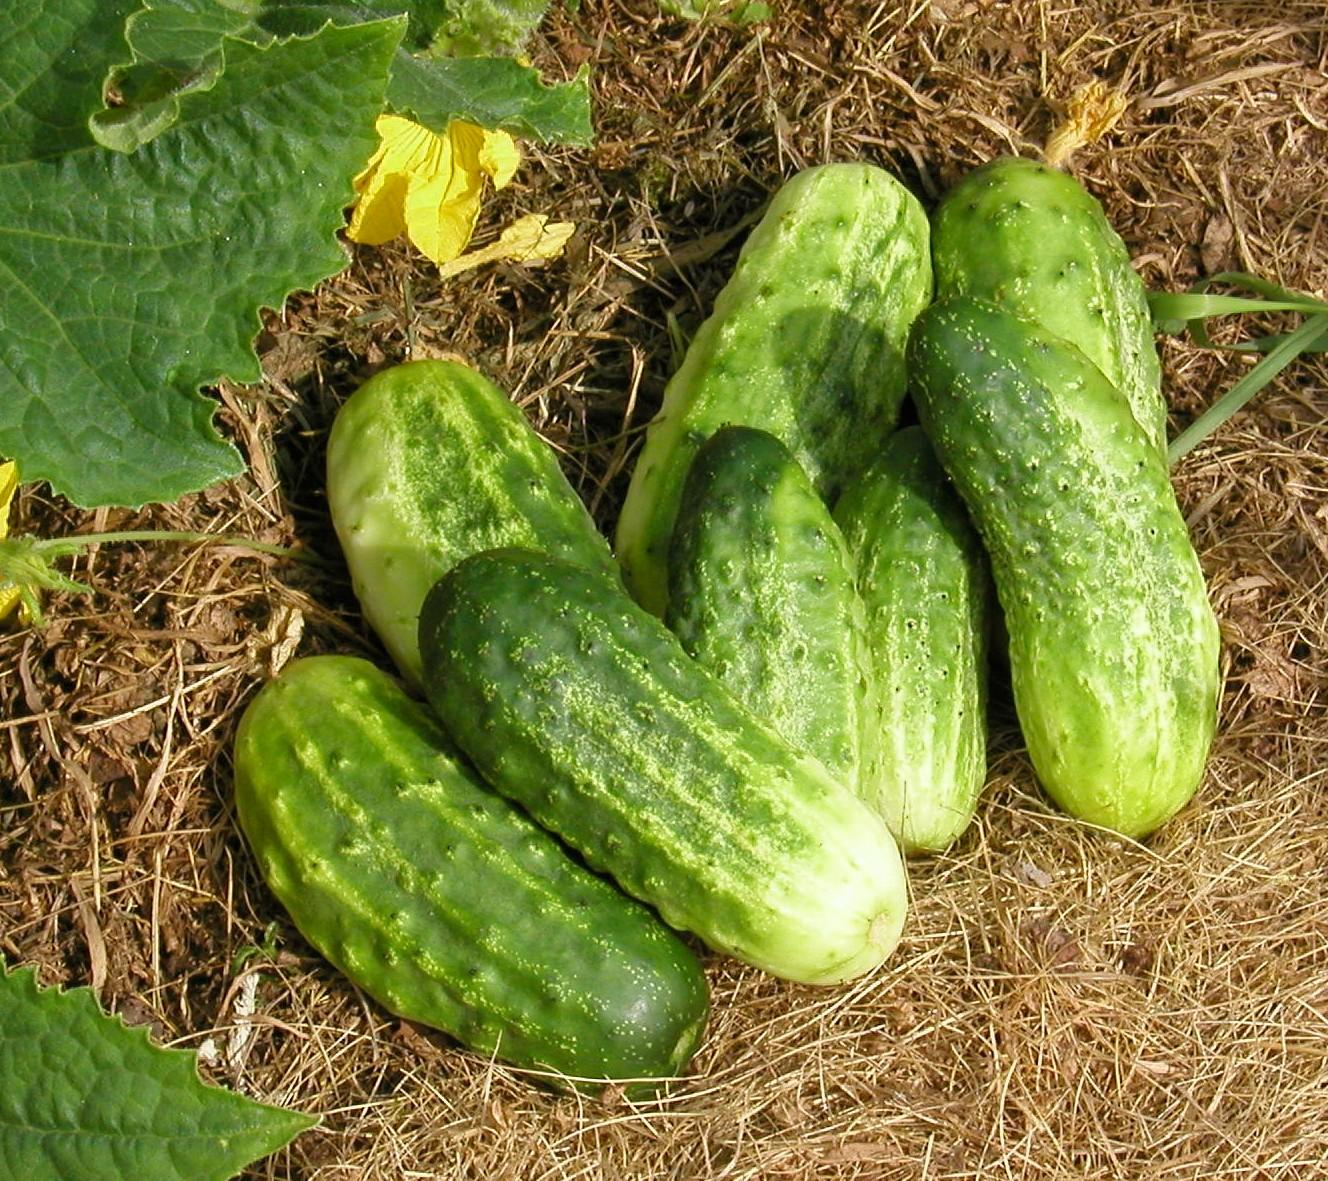 Northern Pickling cucumber